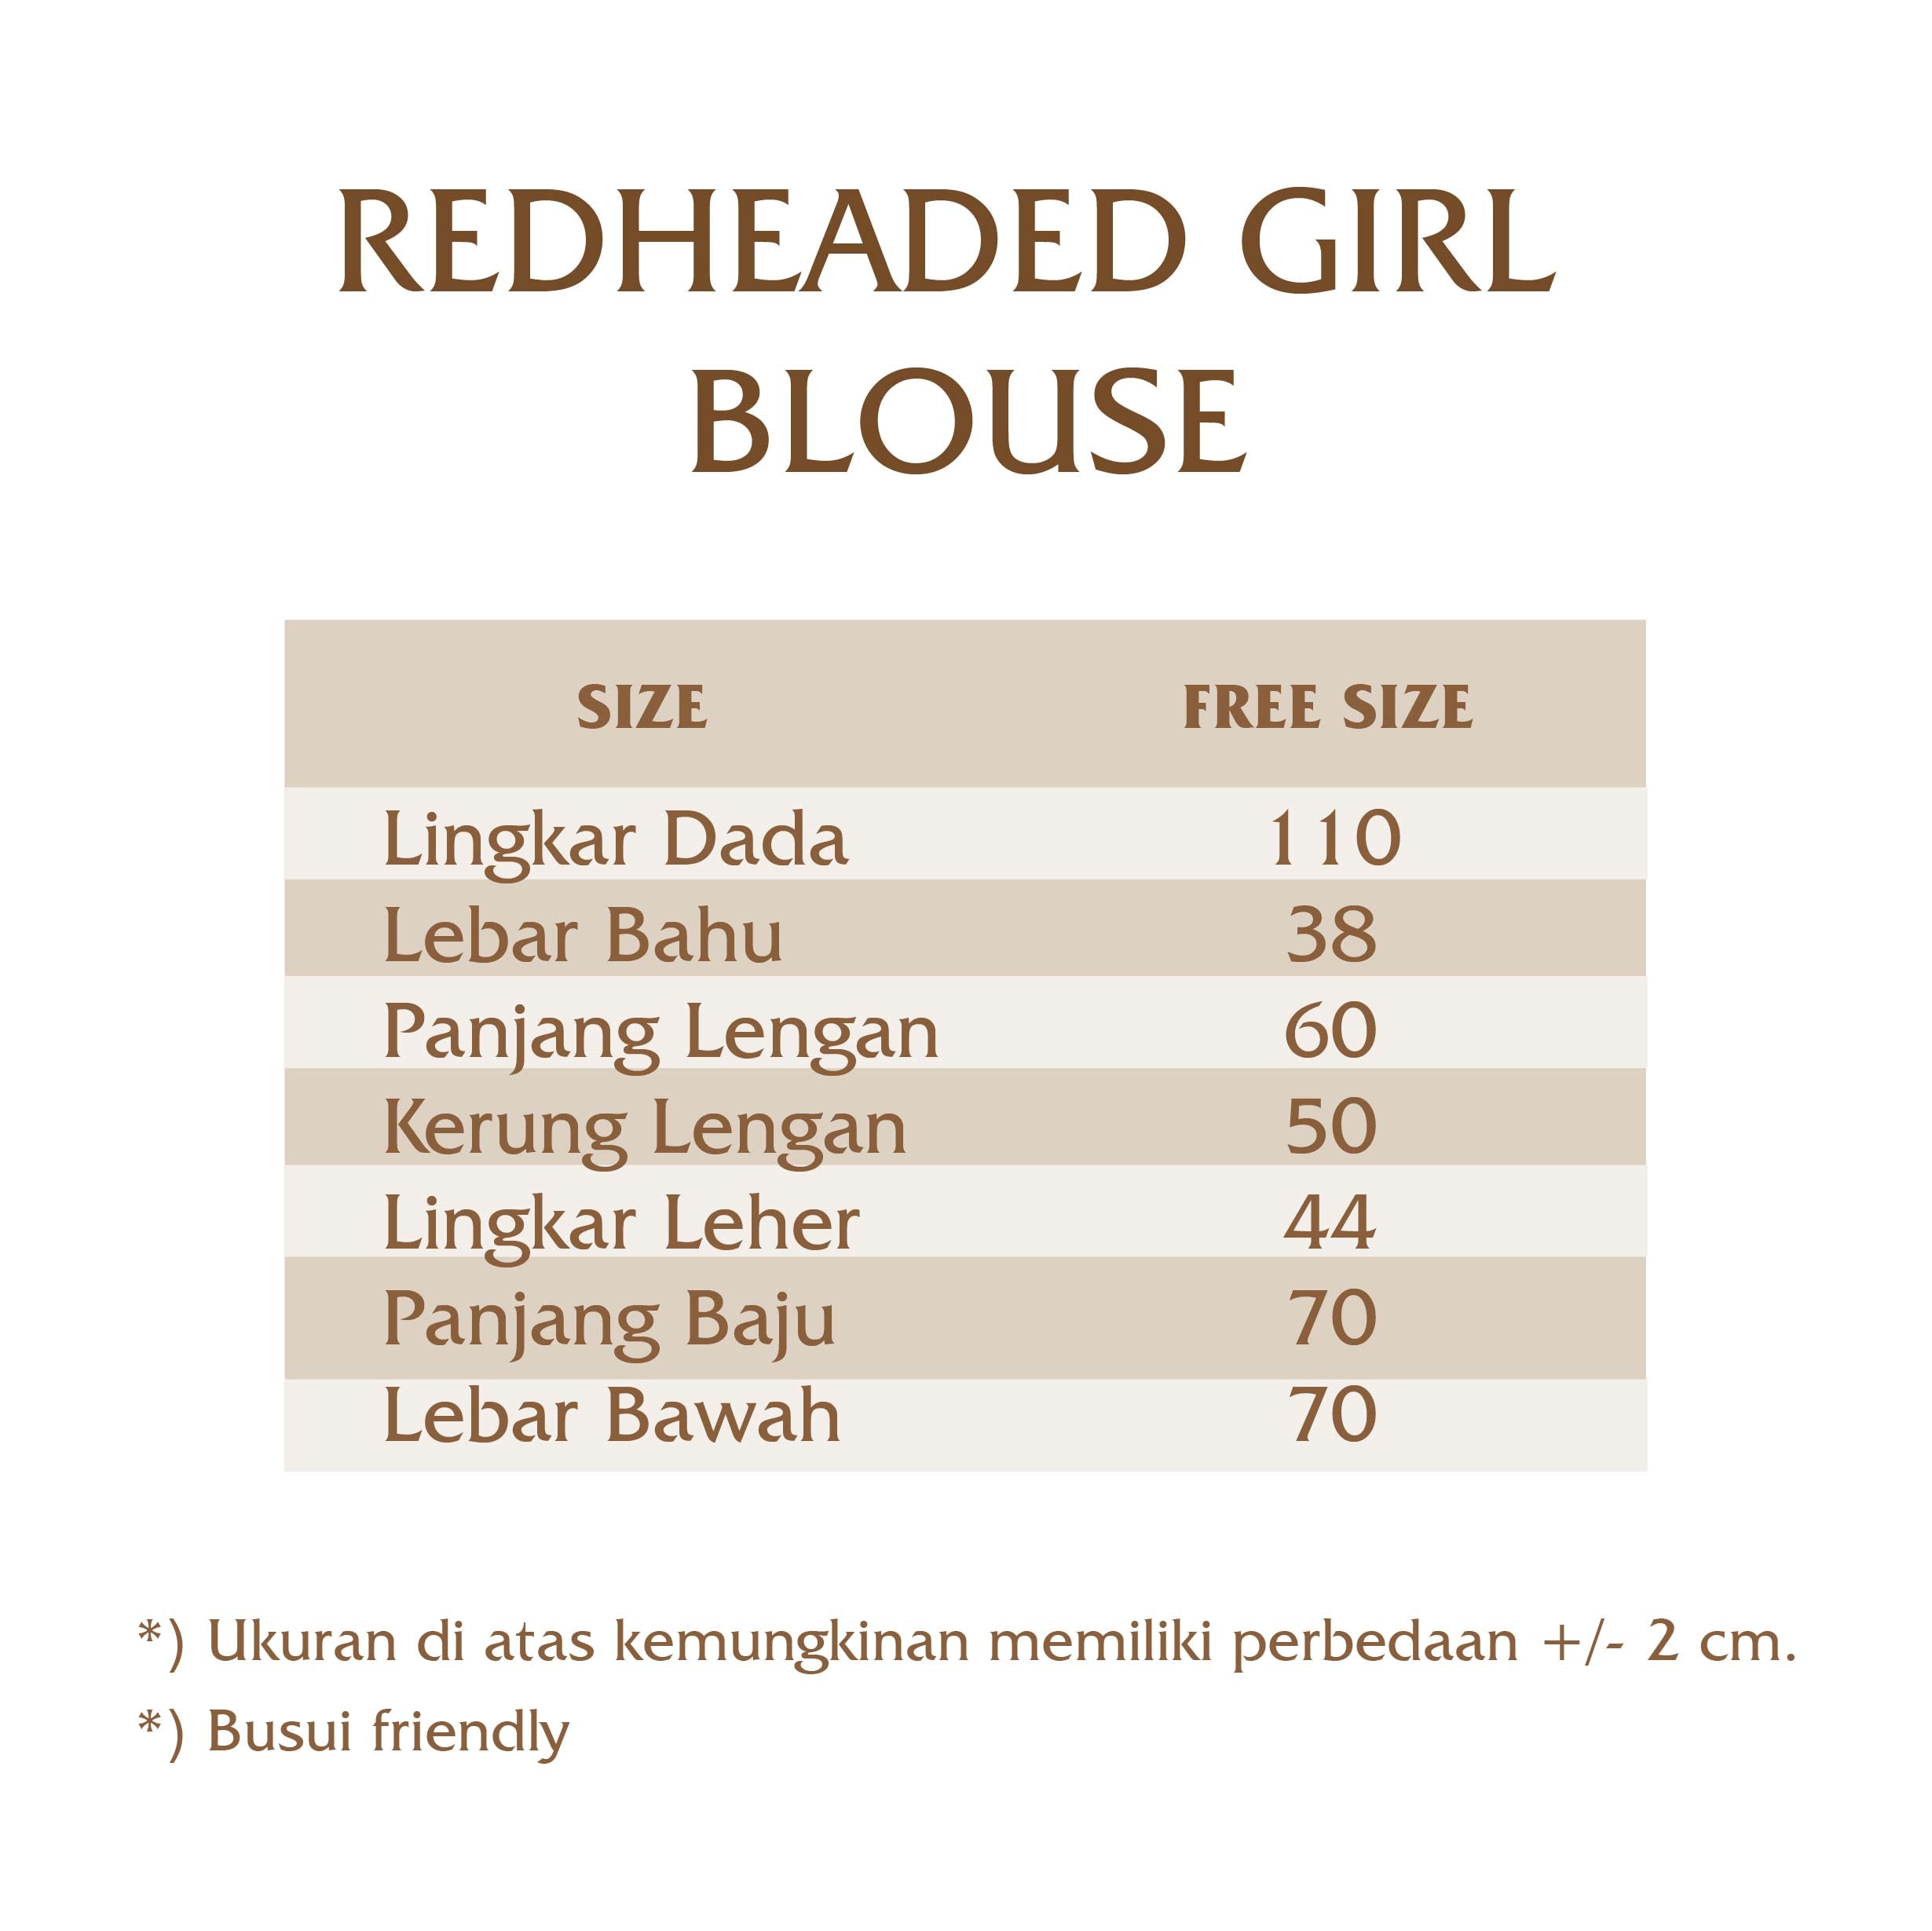 Redheaded Girl Blouse